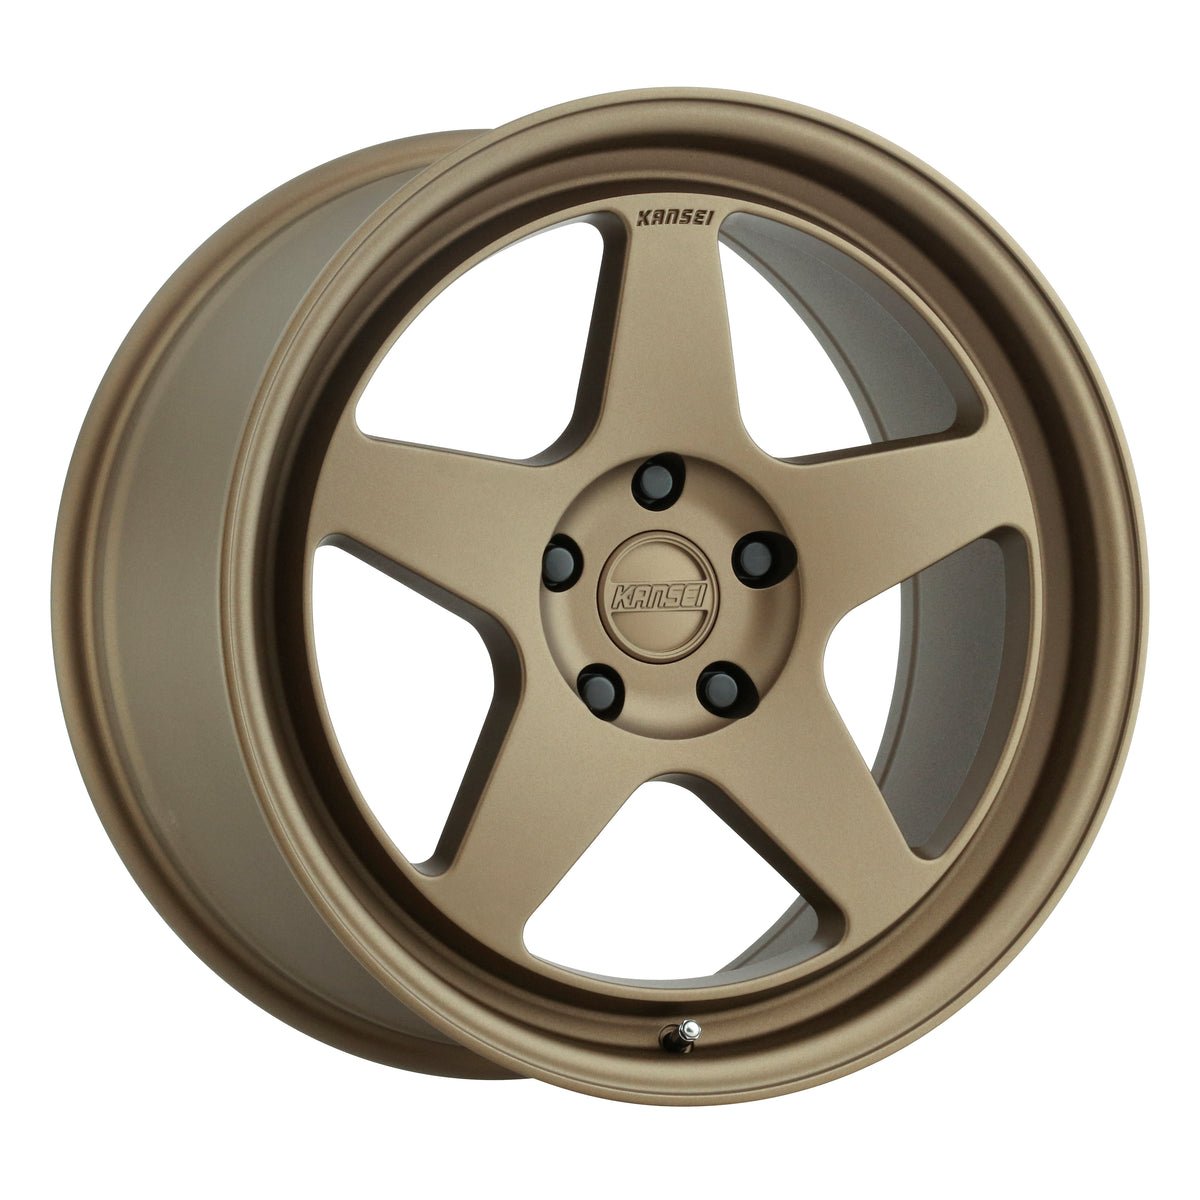 K12B KNP Wheel, Size: 17" x 8.50", Bolt Pattern: 6 x 135 mm, Backspace: 4.75" [Finish: Bronze]